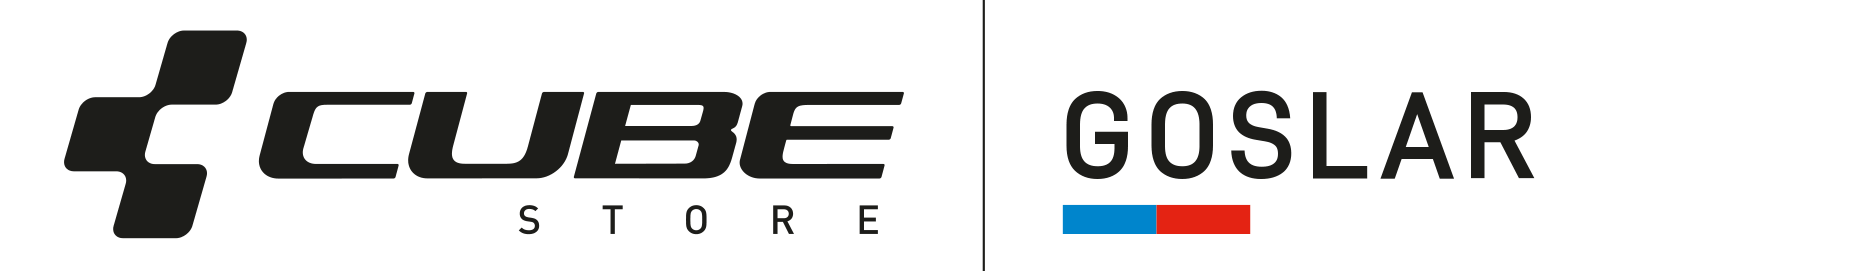 Logo Cube Store Goslar